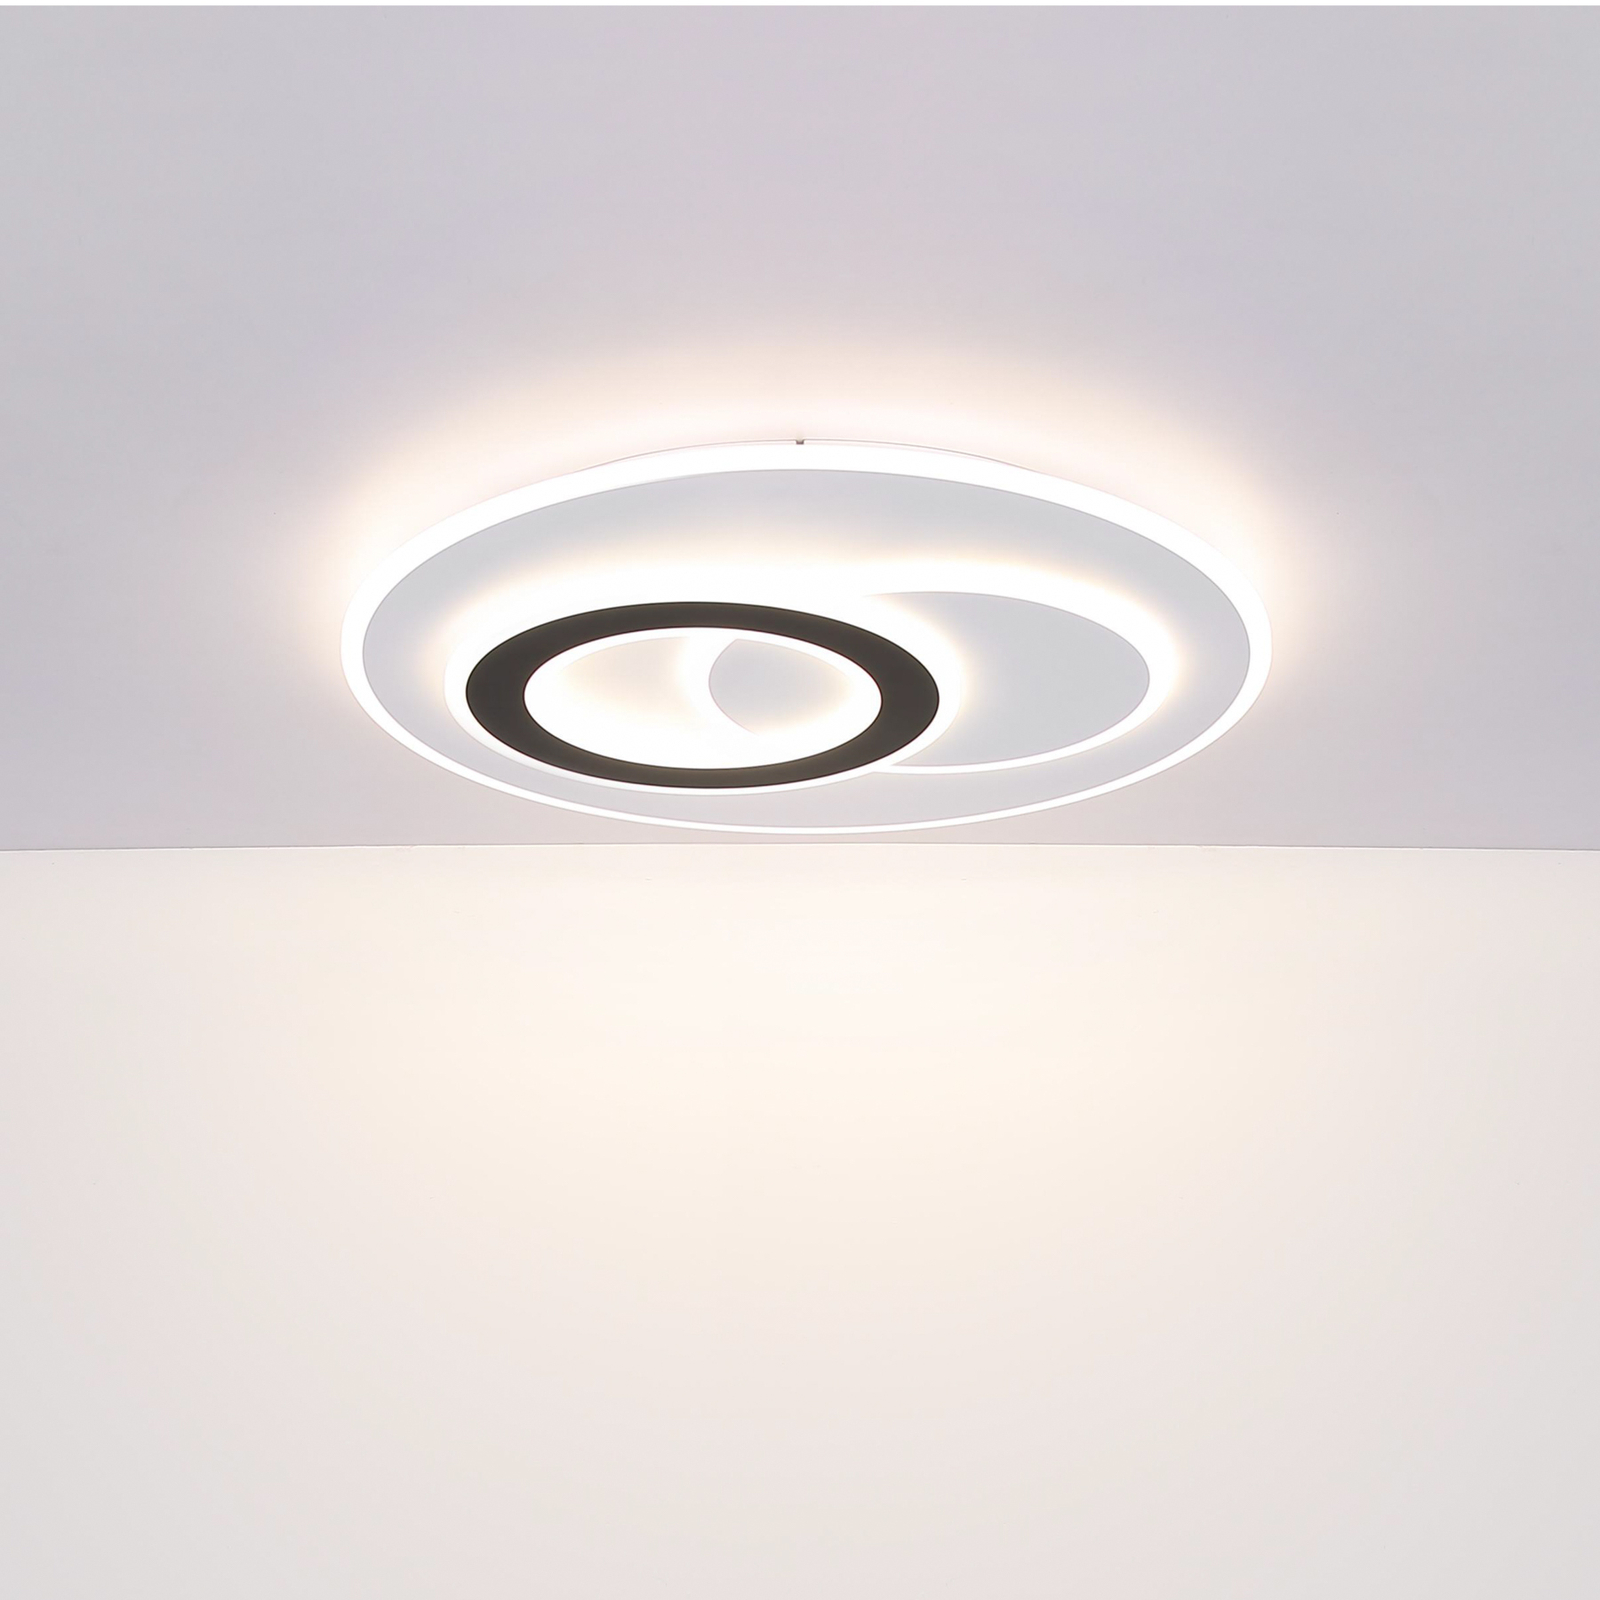 Jacques smart LED ceiling light, white/black, Ø 70 cm, CCT